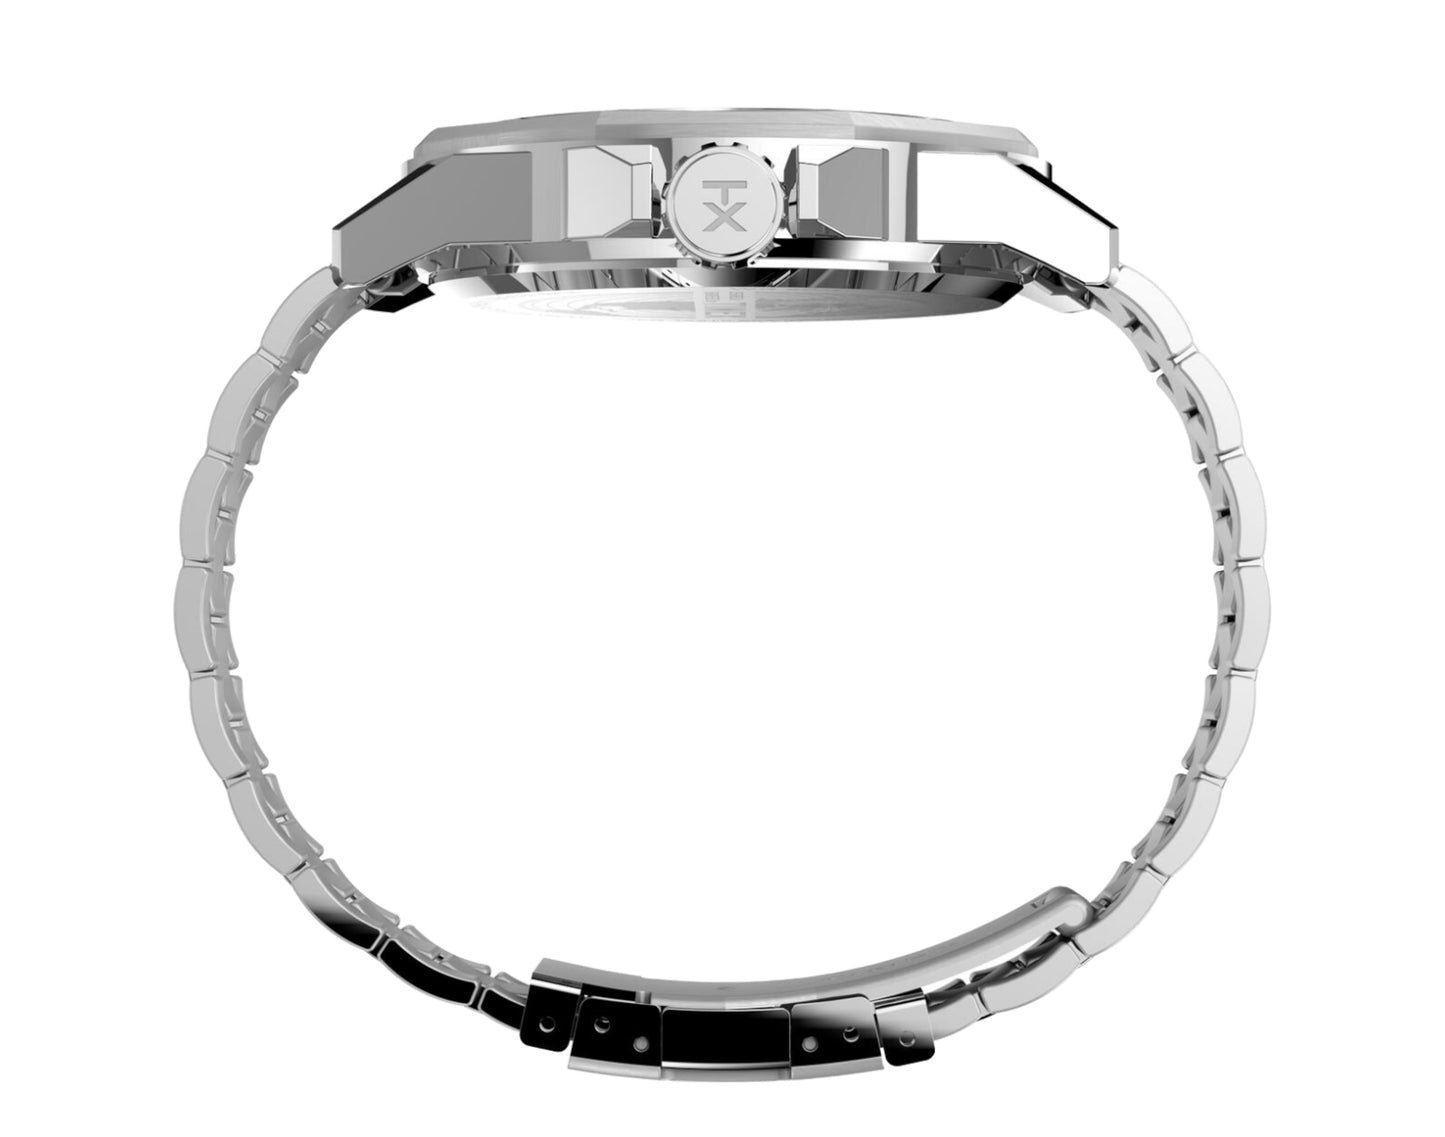 Timex Essex Avenue Multifunction 44mm Stainless Steel Bracelet Watch